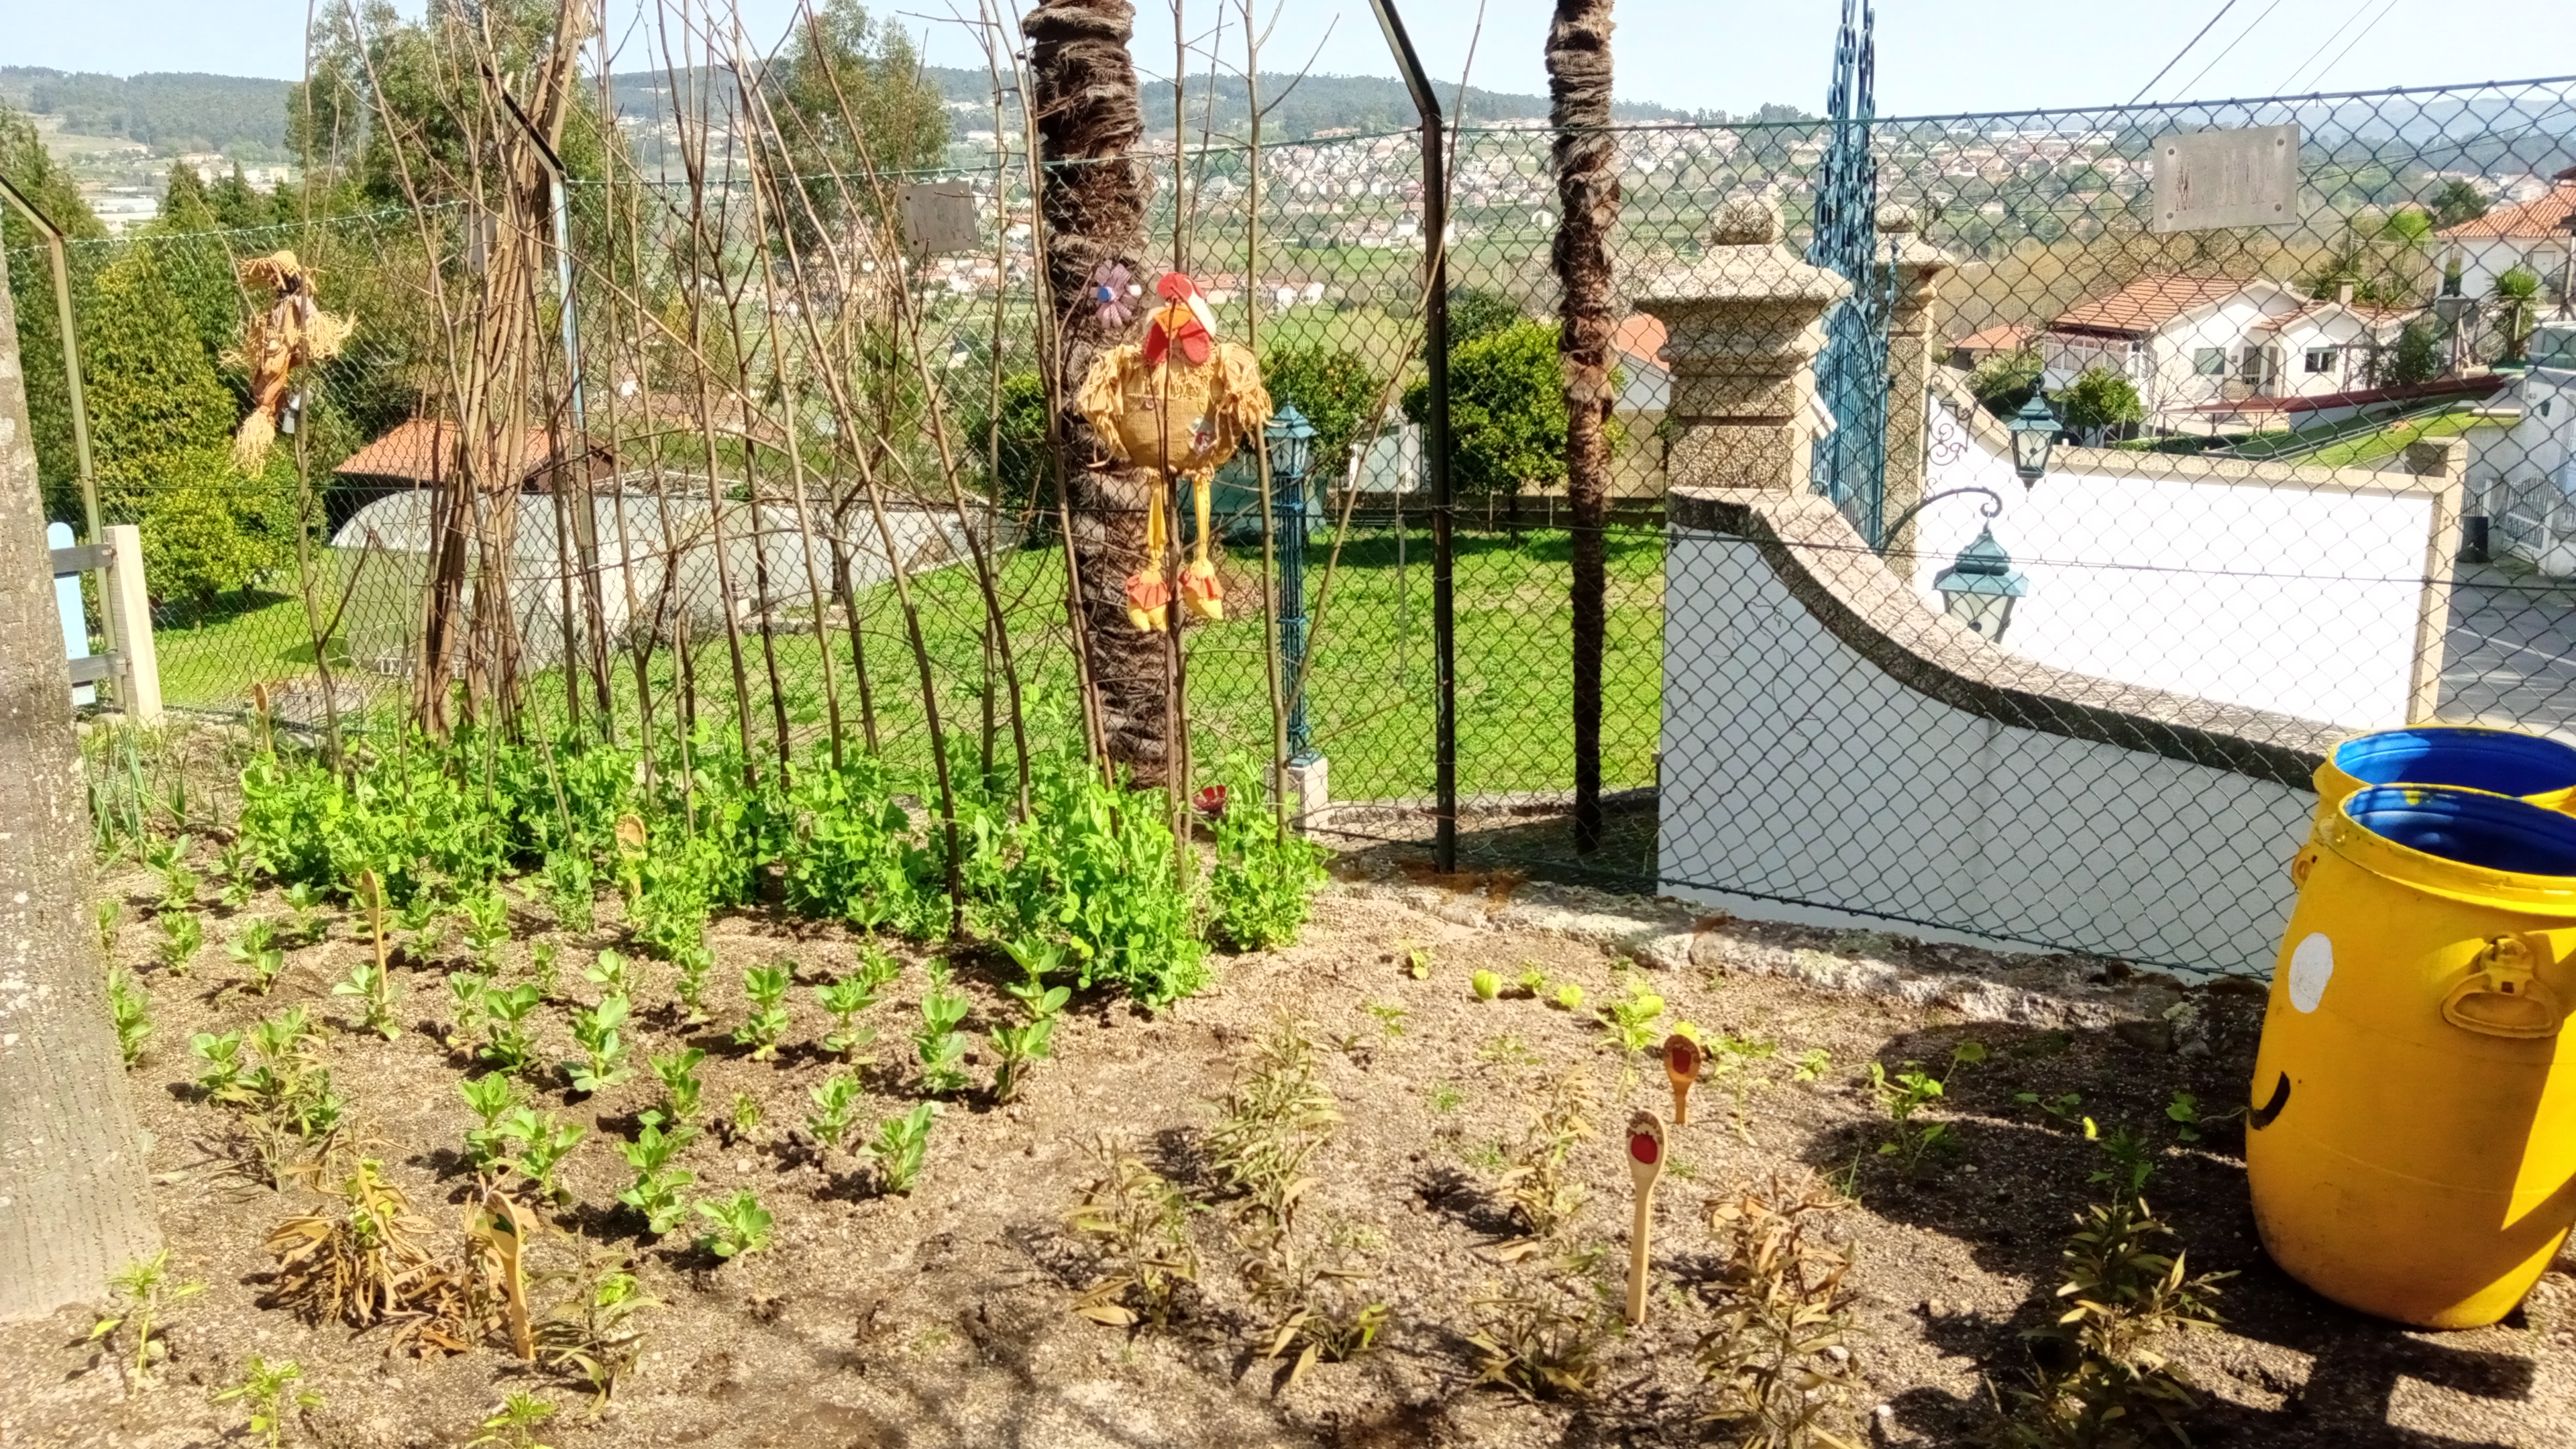 Vista parcial da horta com recipientes de recolha de água da chuva para a rega.